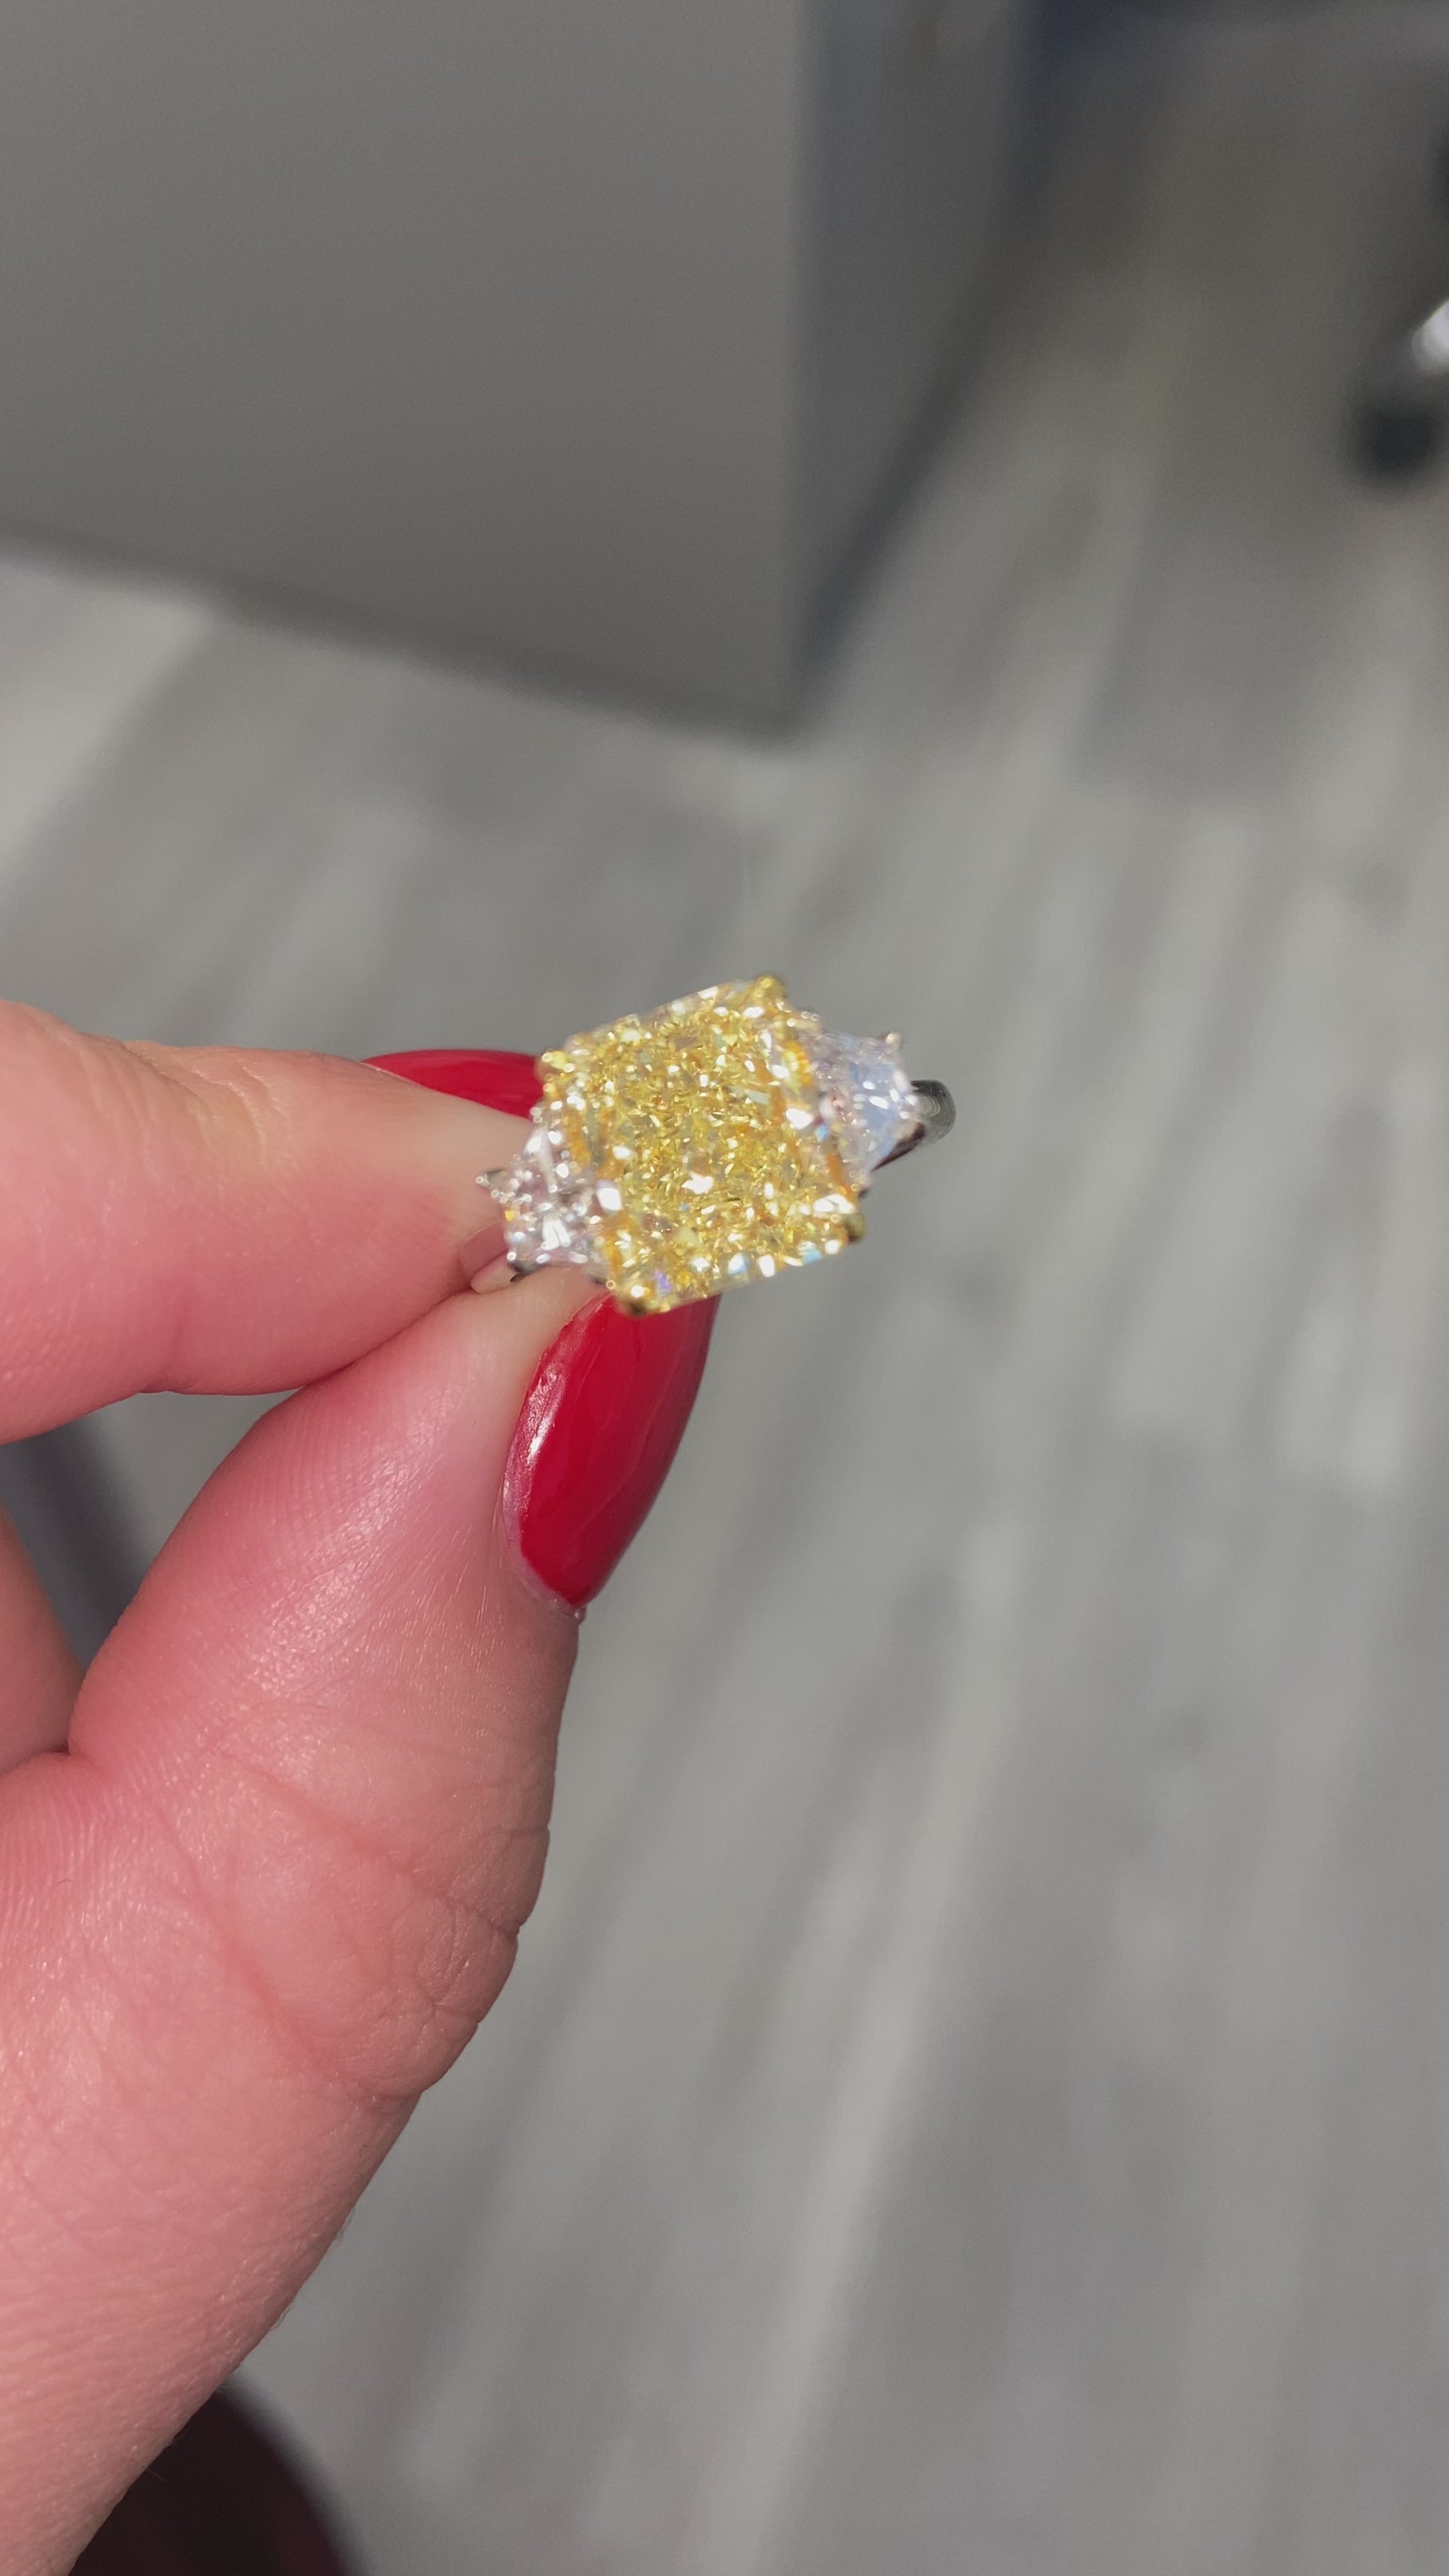 4 carat fancy yellow radiant set in 3 stone platinum ring